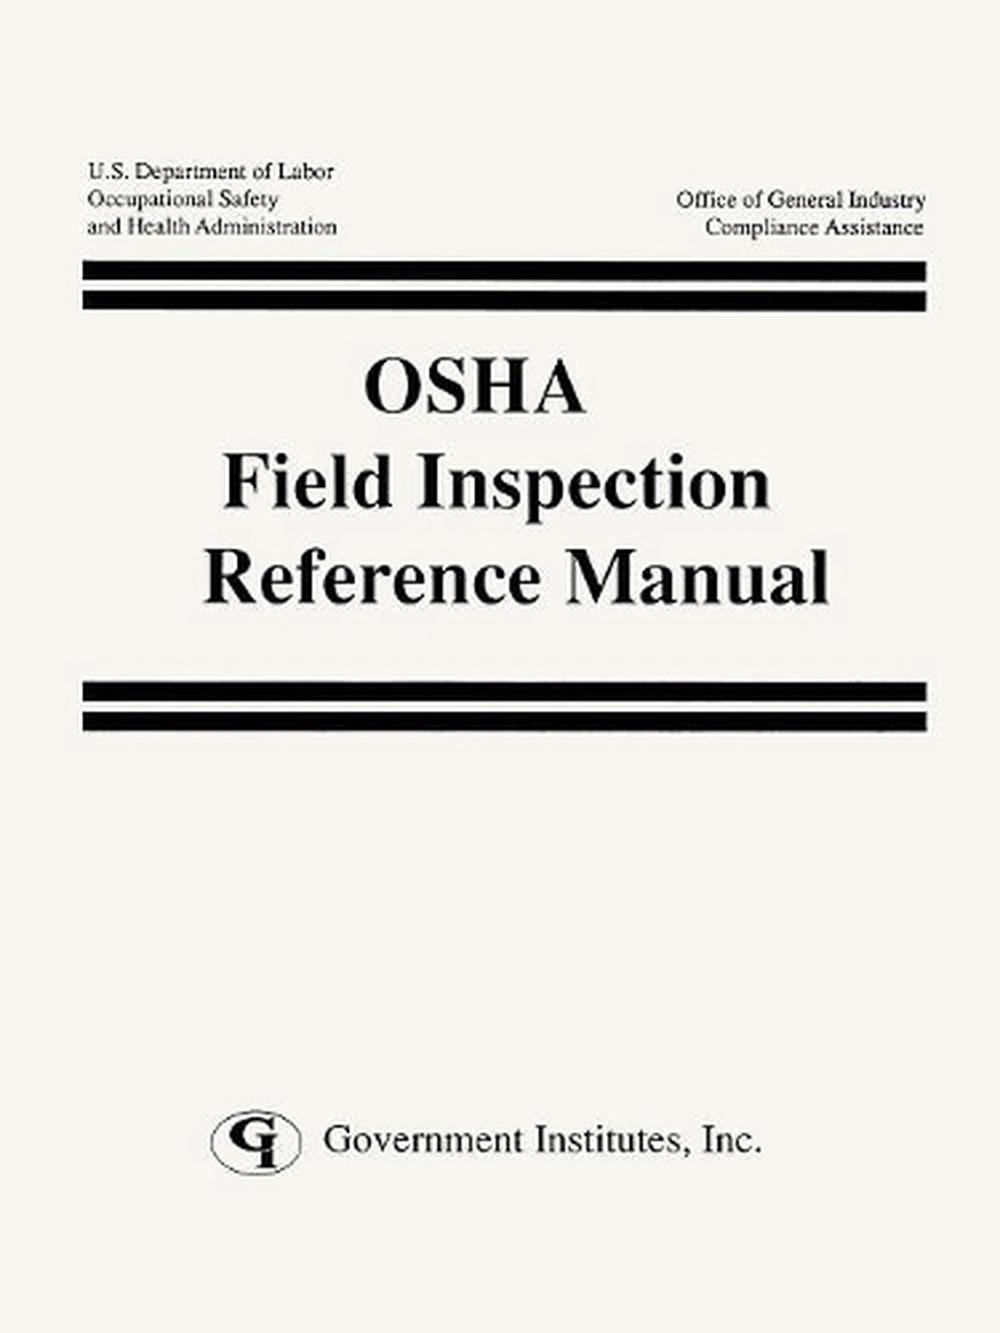 OSHA Field Inspection Reference Manual by U.S